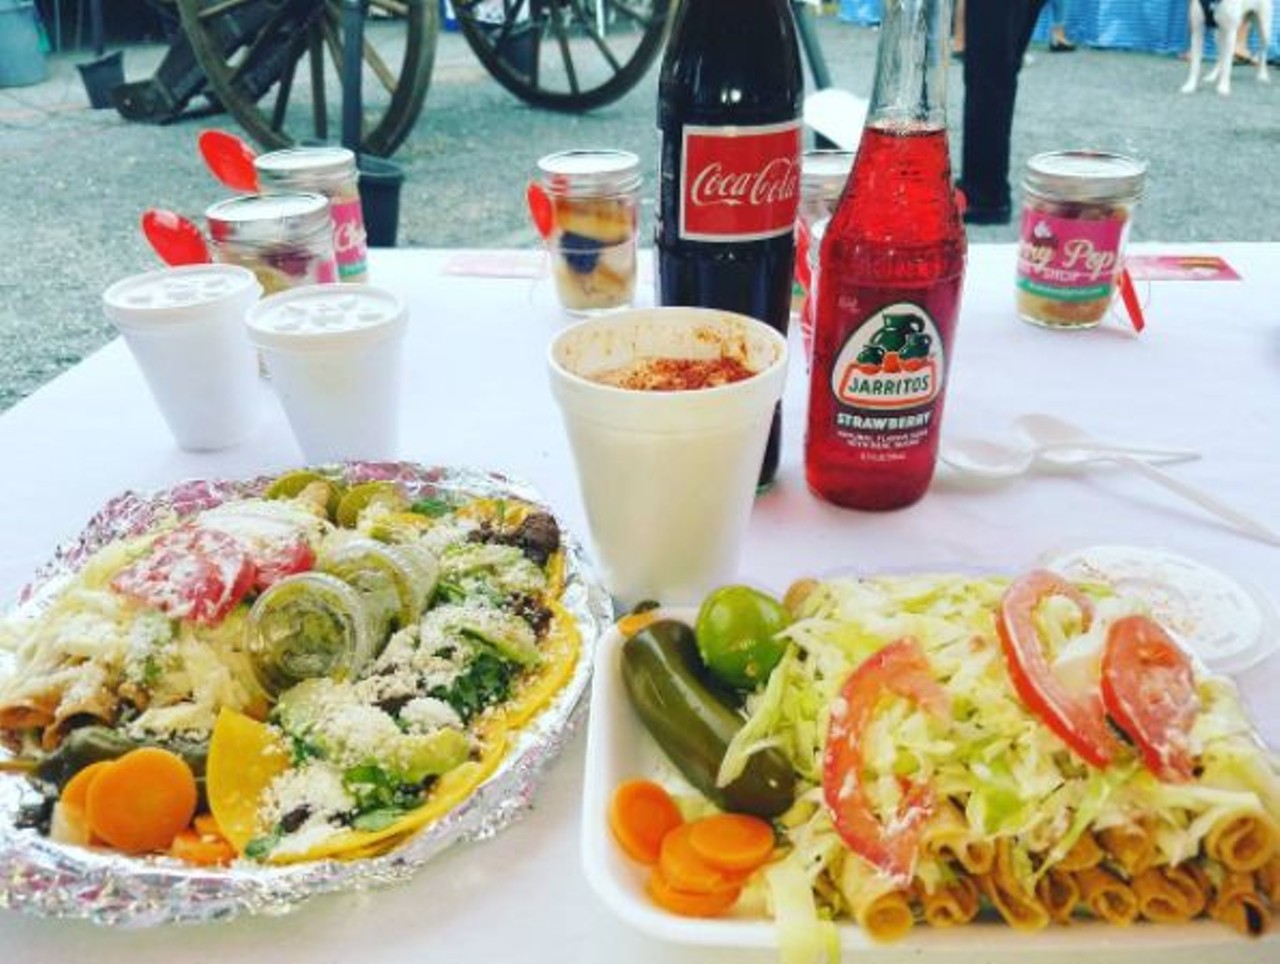 Best Tacos
La Maceta Tapatios, (210) 419-3845, facebook.com/lamaceta.52
Photo via Instagram, cherry_pop_bakeshop